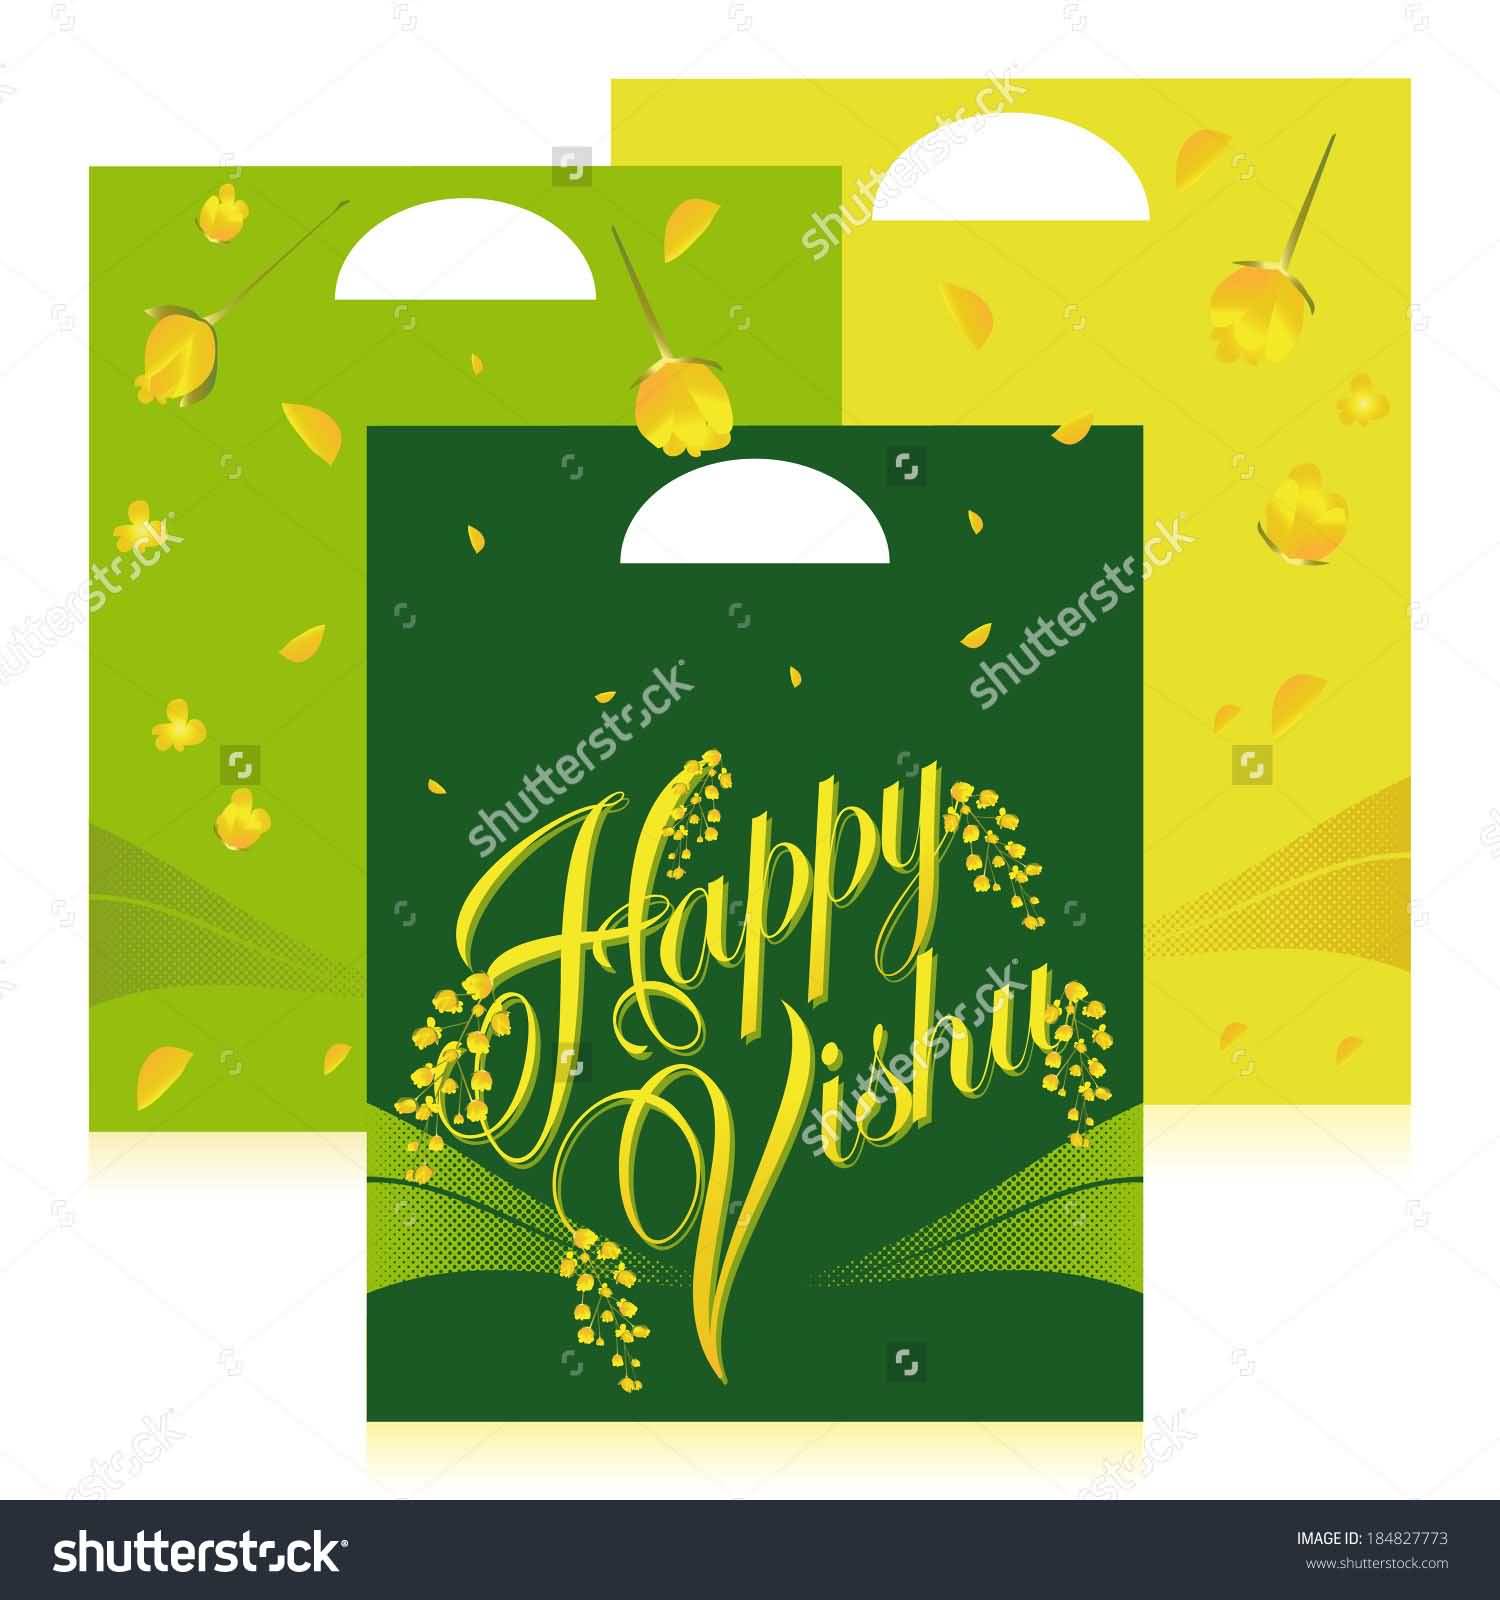 Happy Vishu Greeting Card